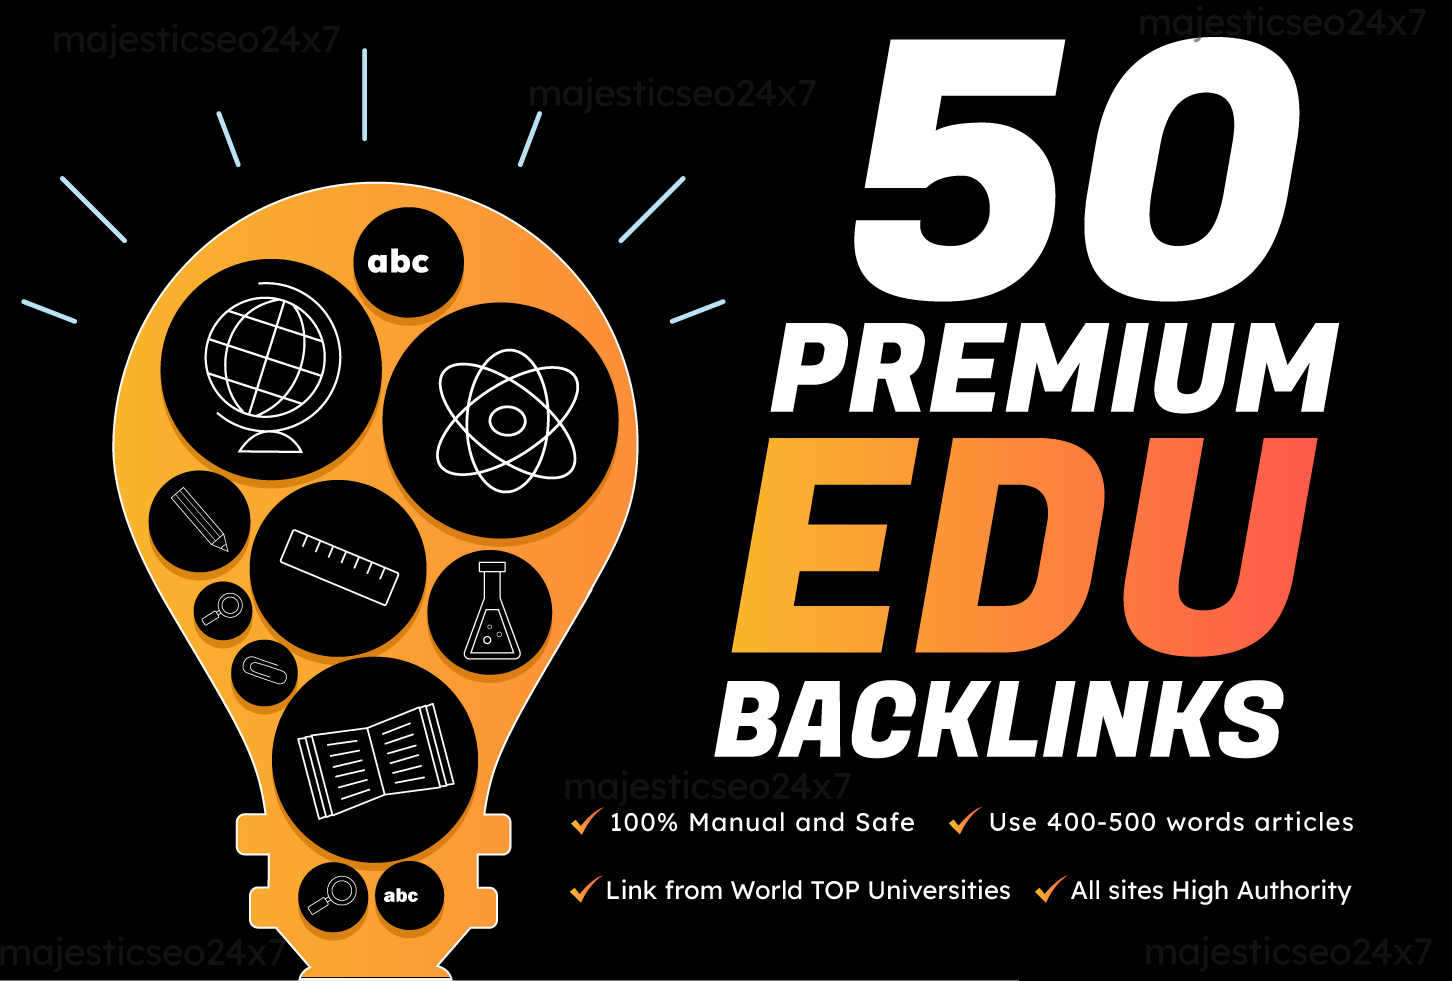 50 Premium EDU backlinks From Top Universities